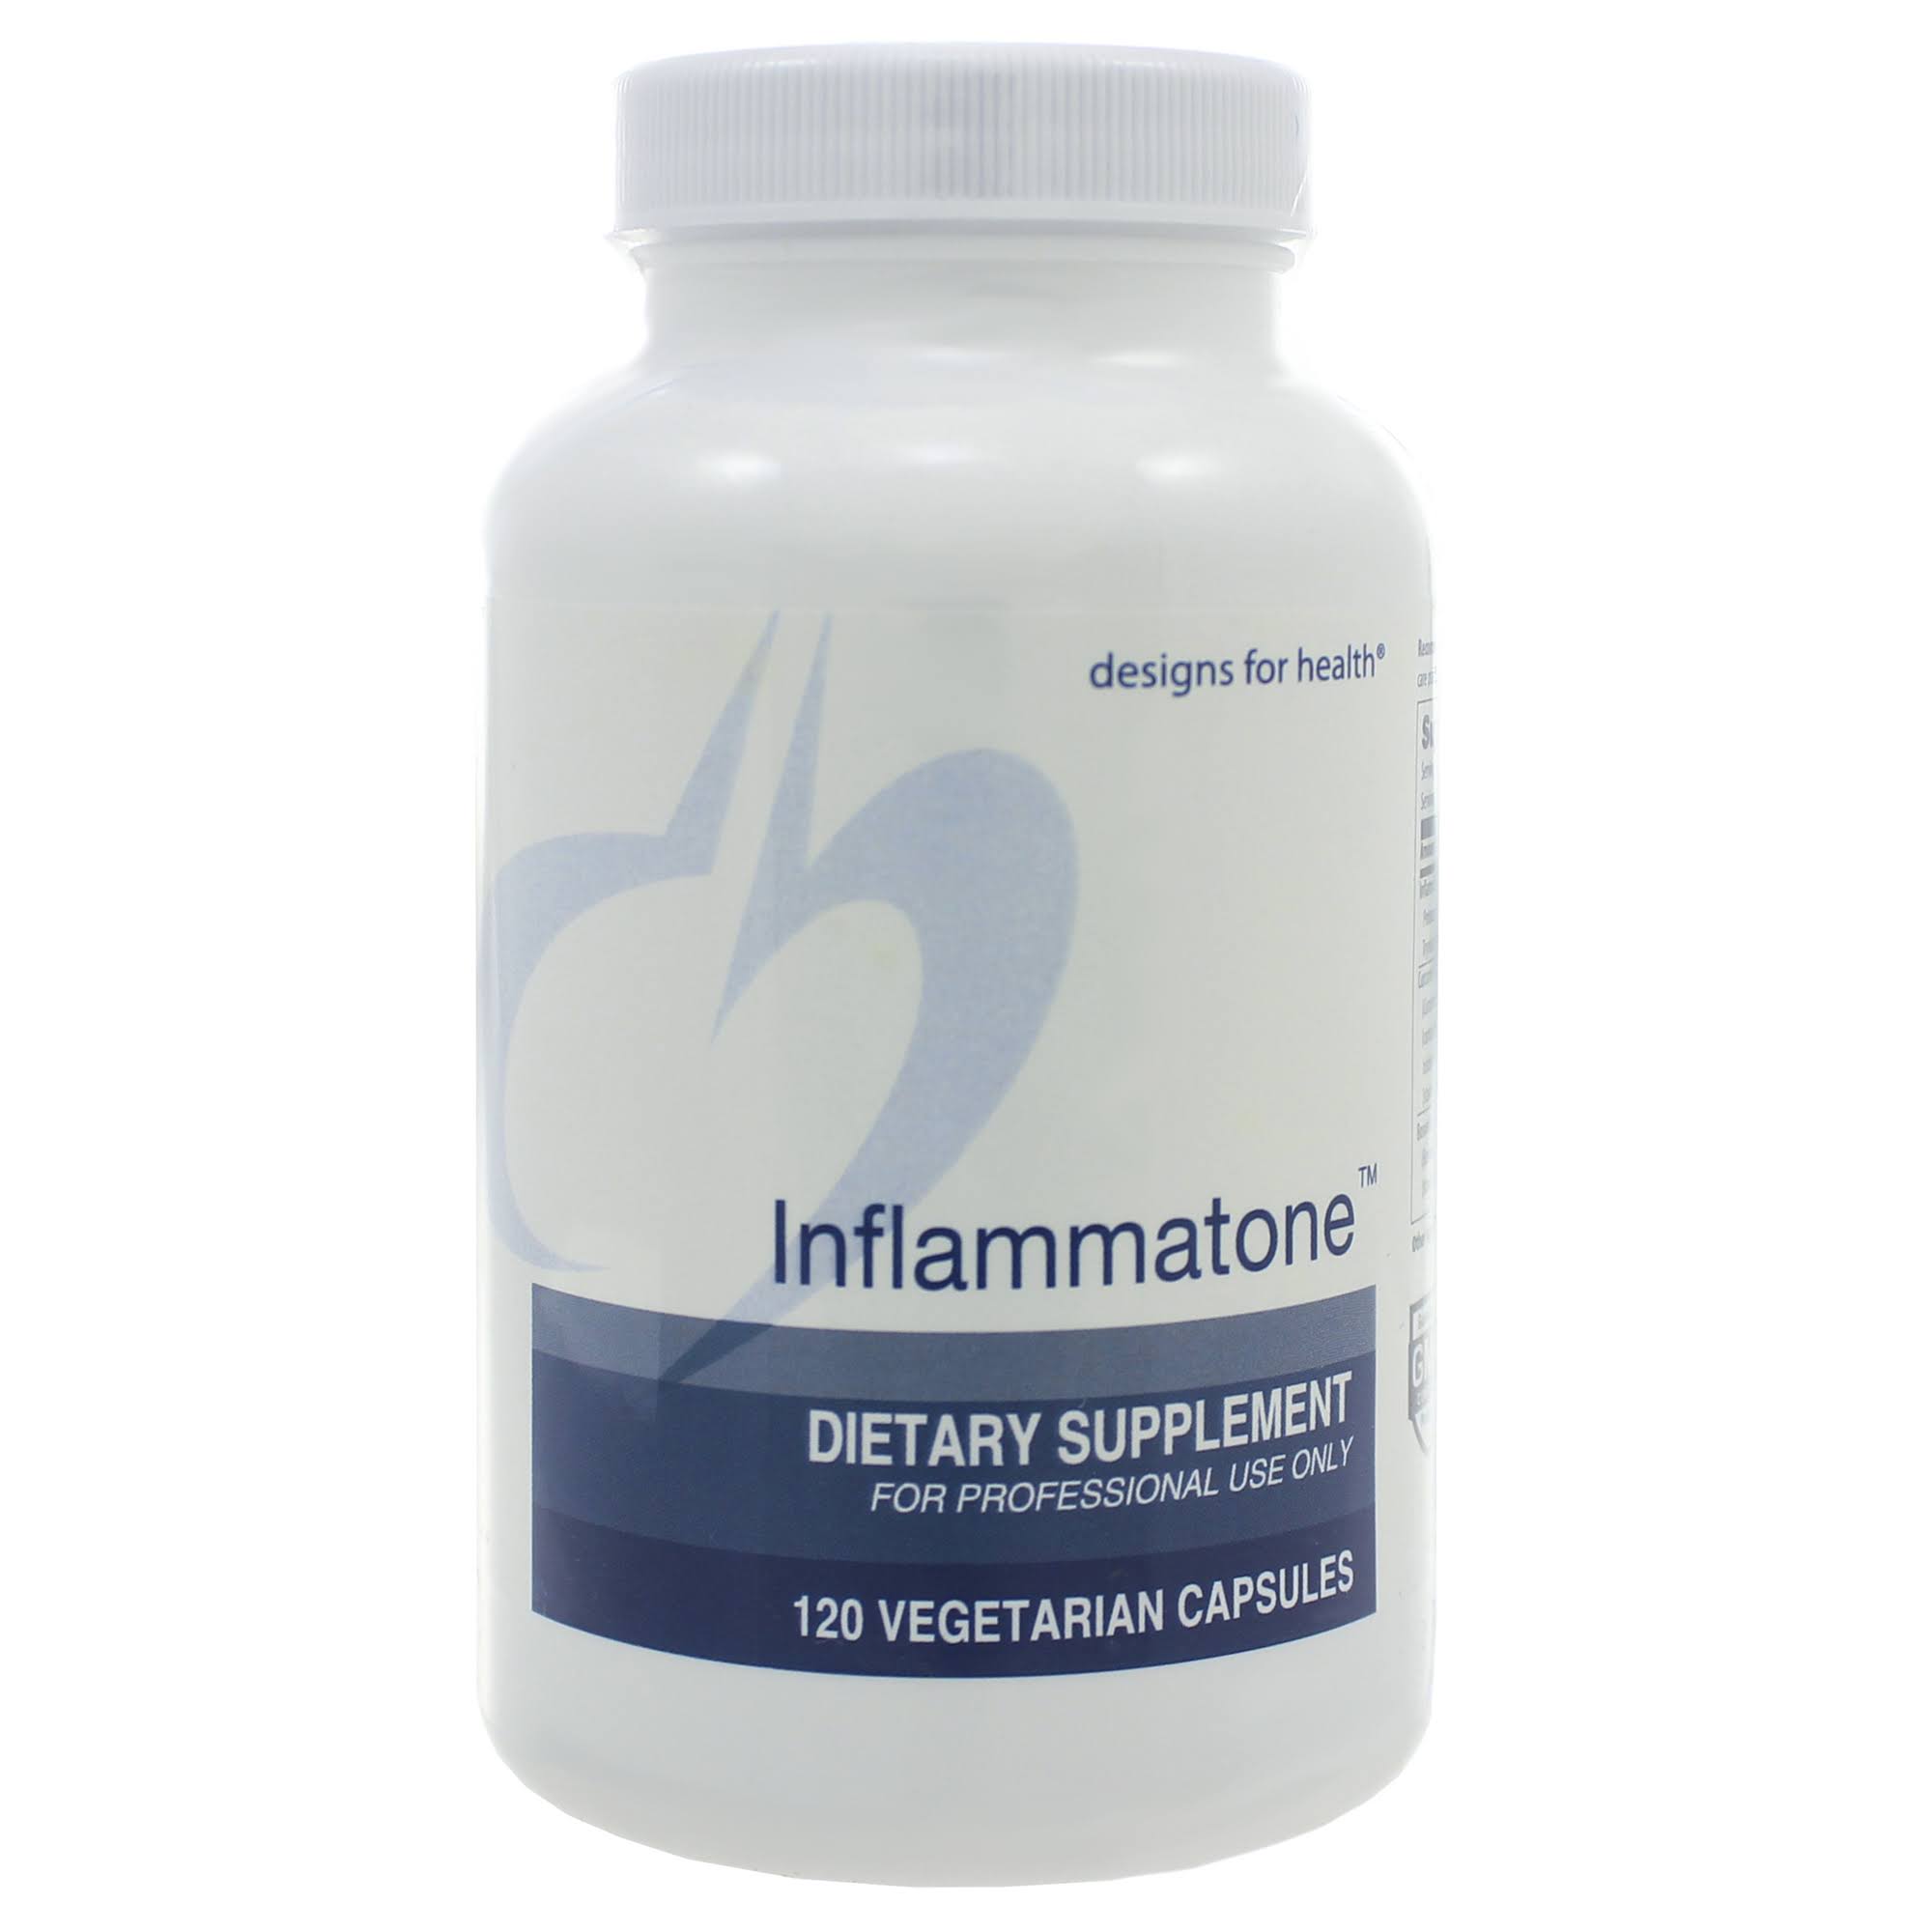 Designs for Health Inflammatone Dietary Supplement - 120 Capsules